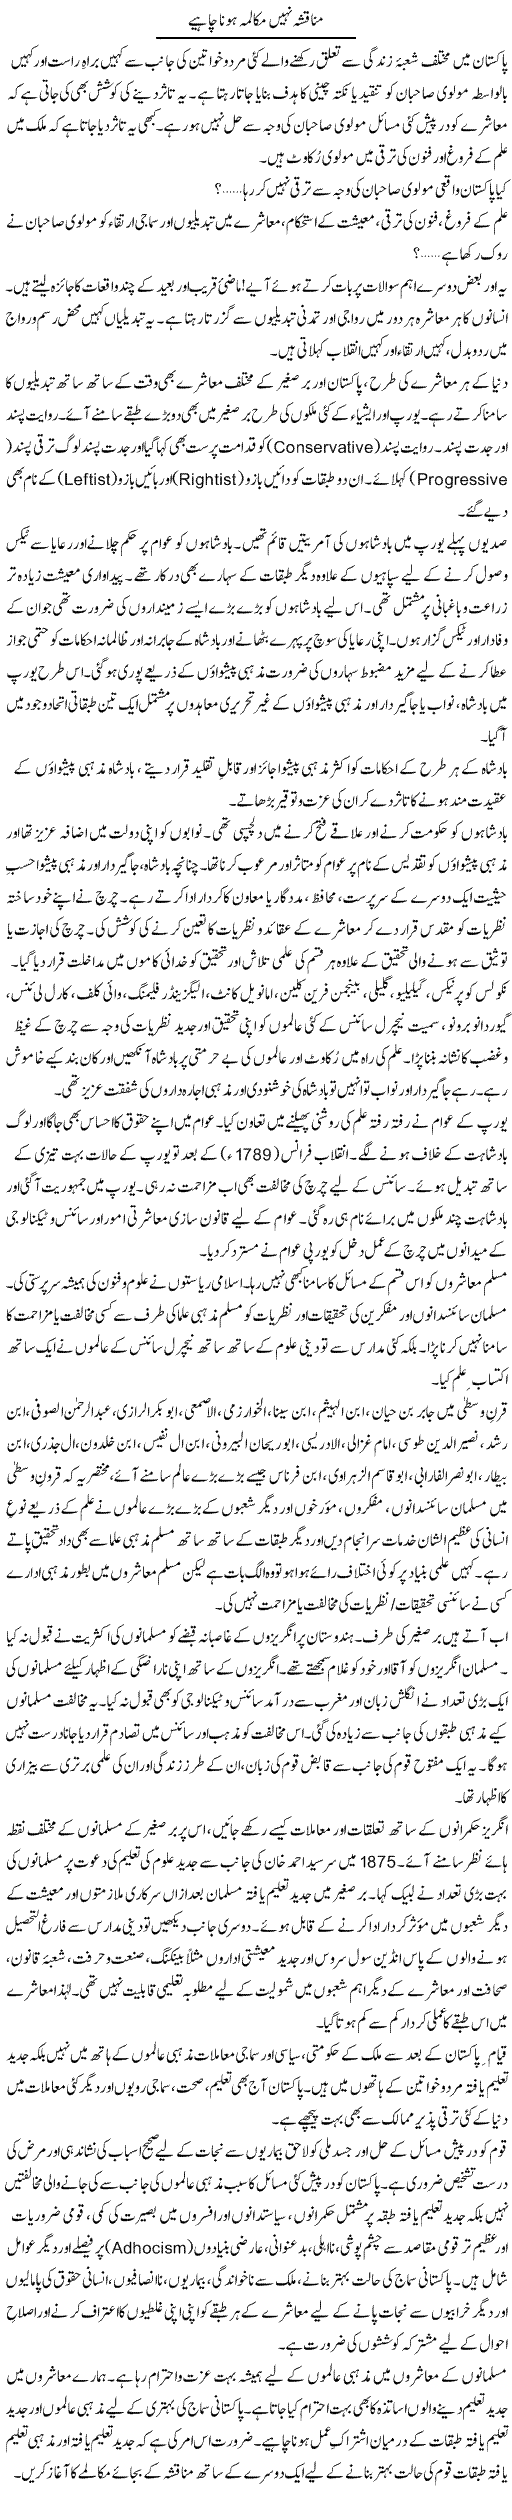 Munaqsha Nahi Mukalama Hona Chahiye | Dr. Waqar Yousuf Azeemi | Daily Urdu Columns